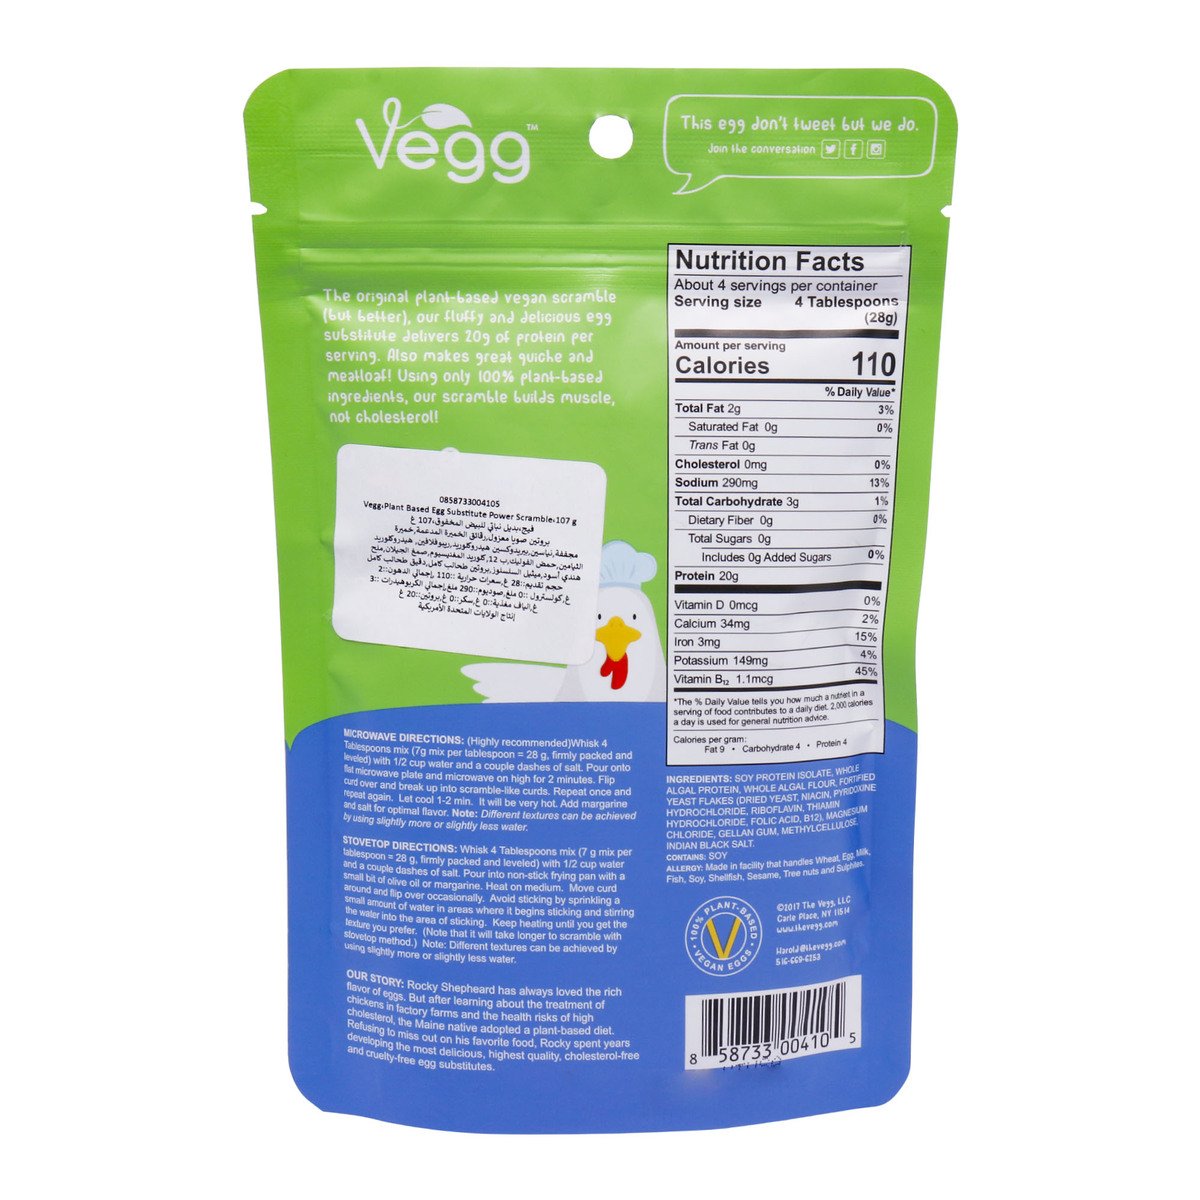 Vegg Egg Substitute Power Scramble Original Blend 107 g